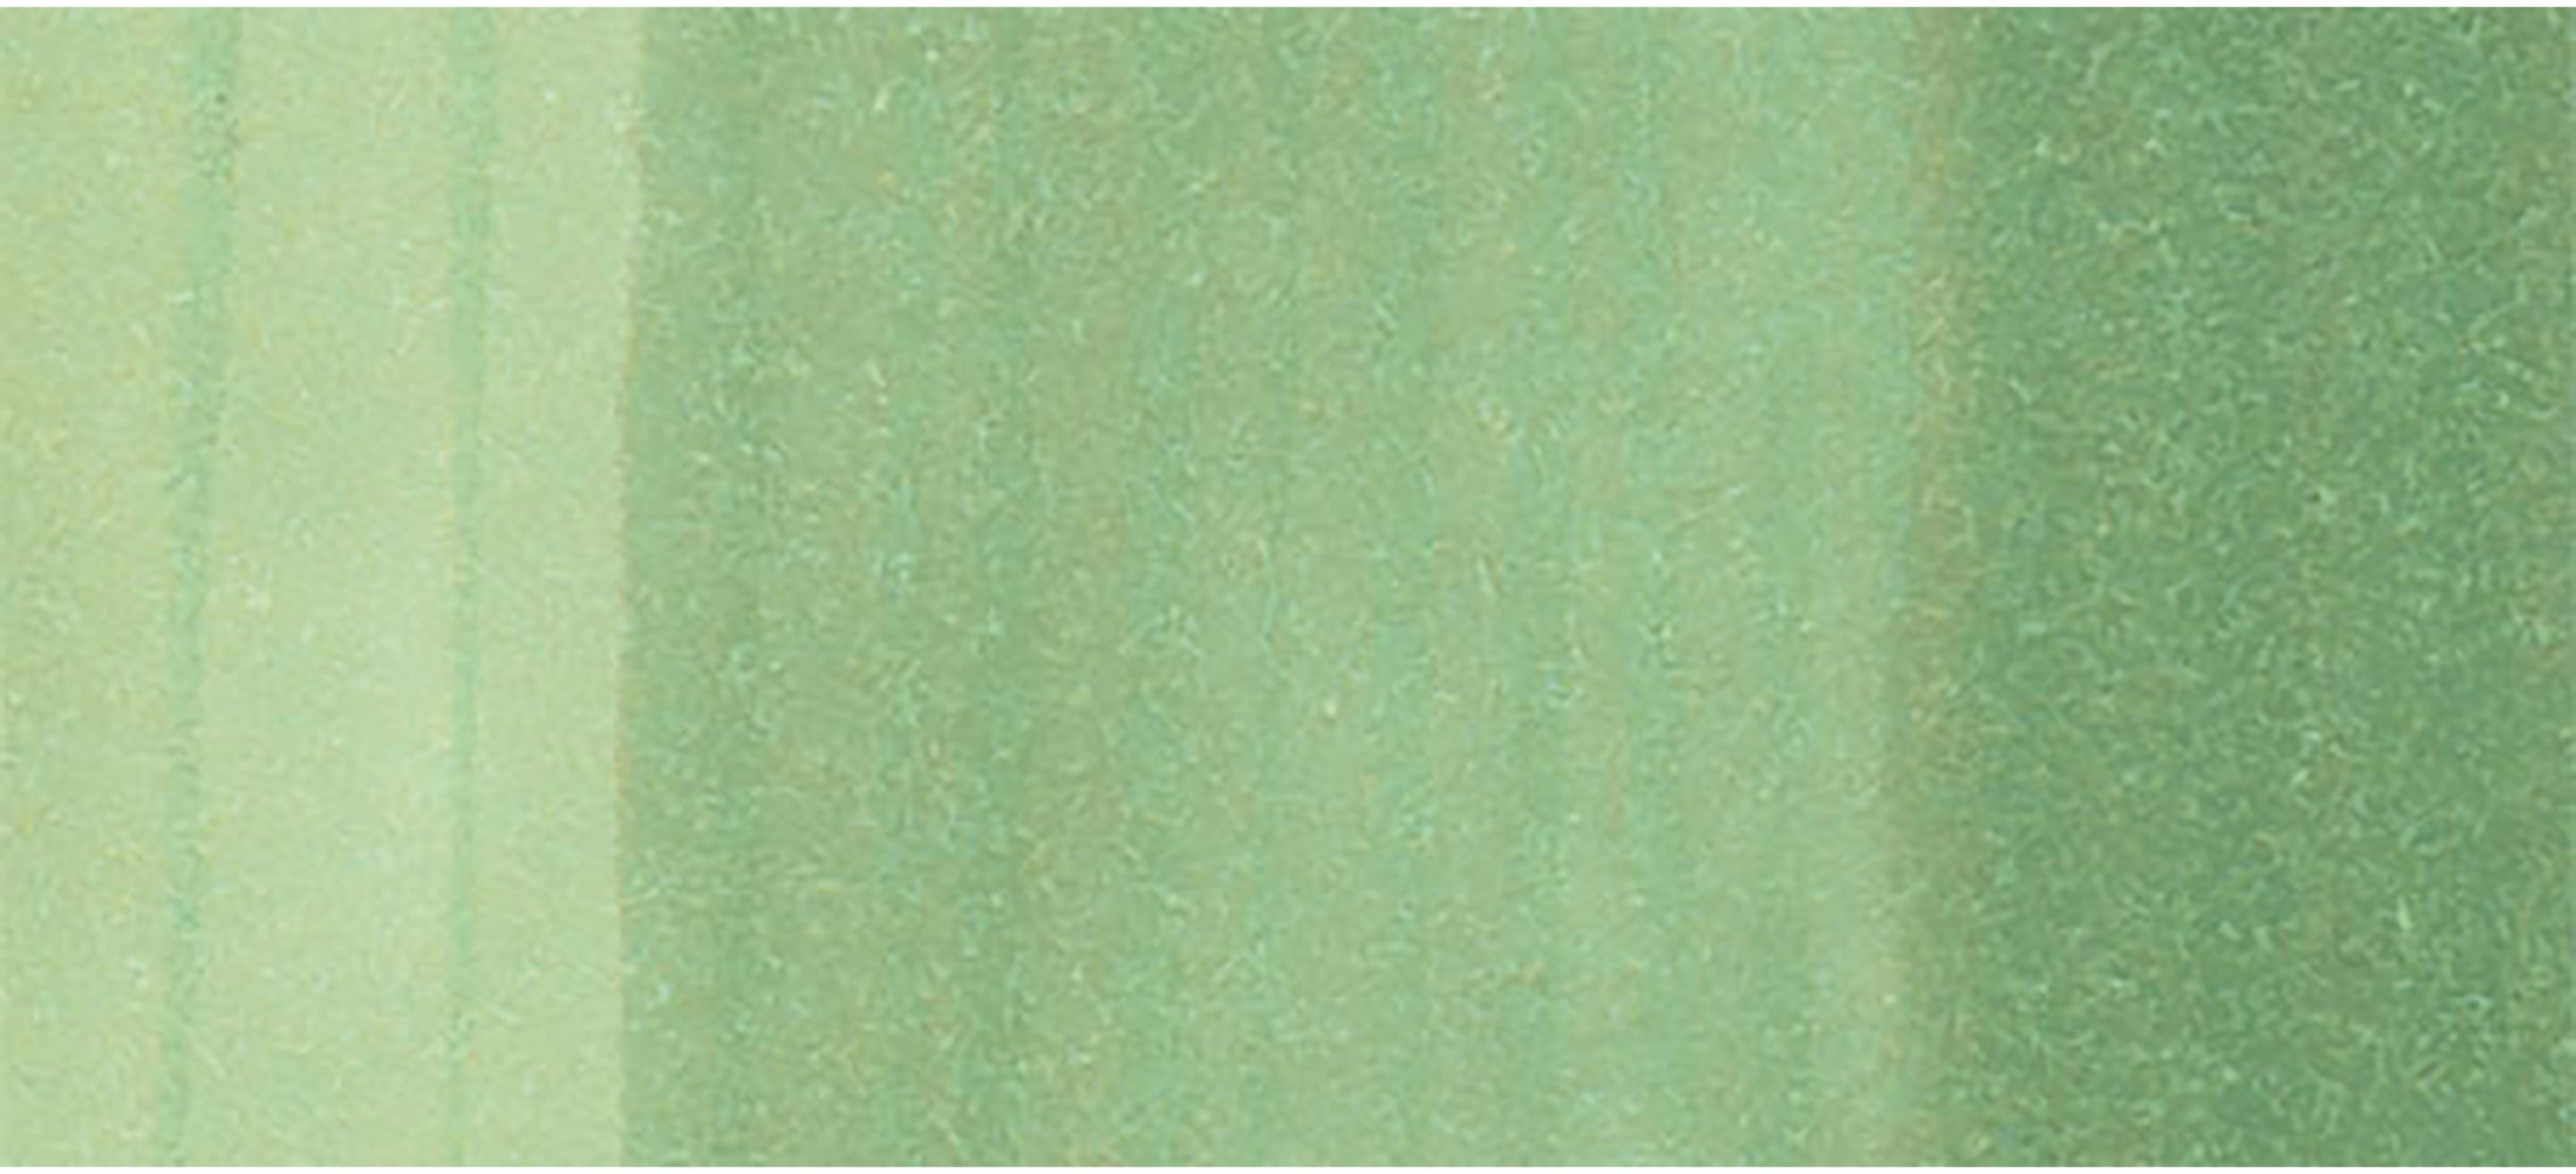 COPIC Marker Sketch 21075203 YG45 - Cobalt Green